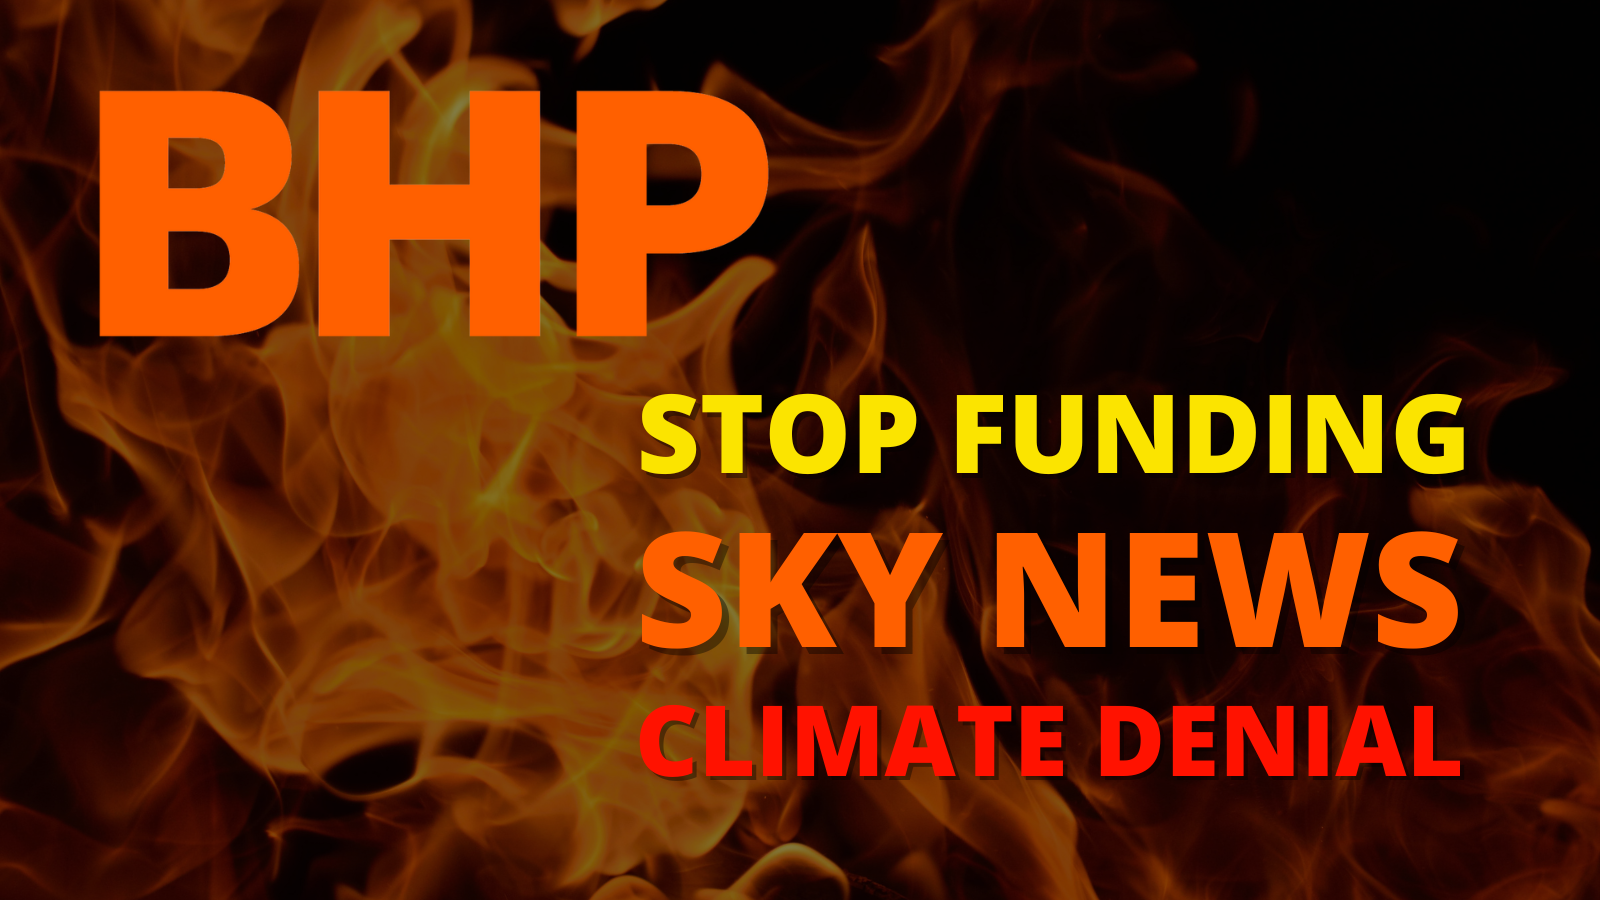 BHP: Stop funding sky news climate denial